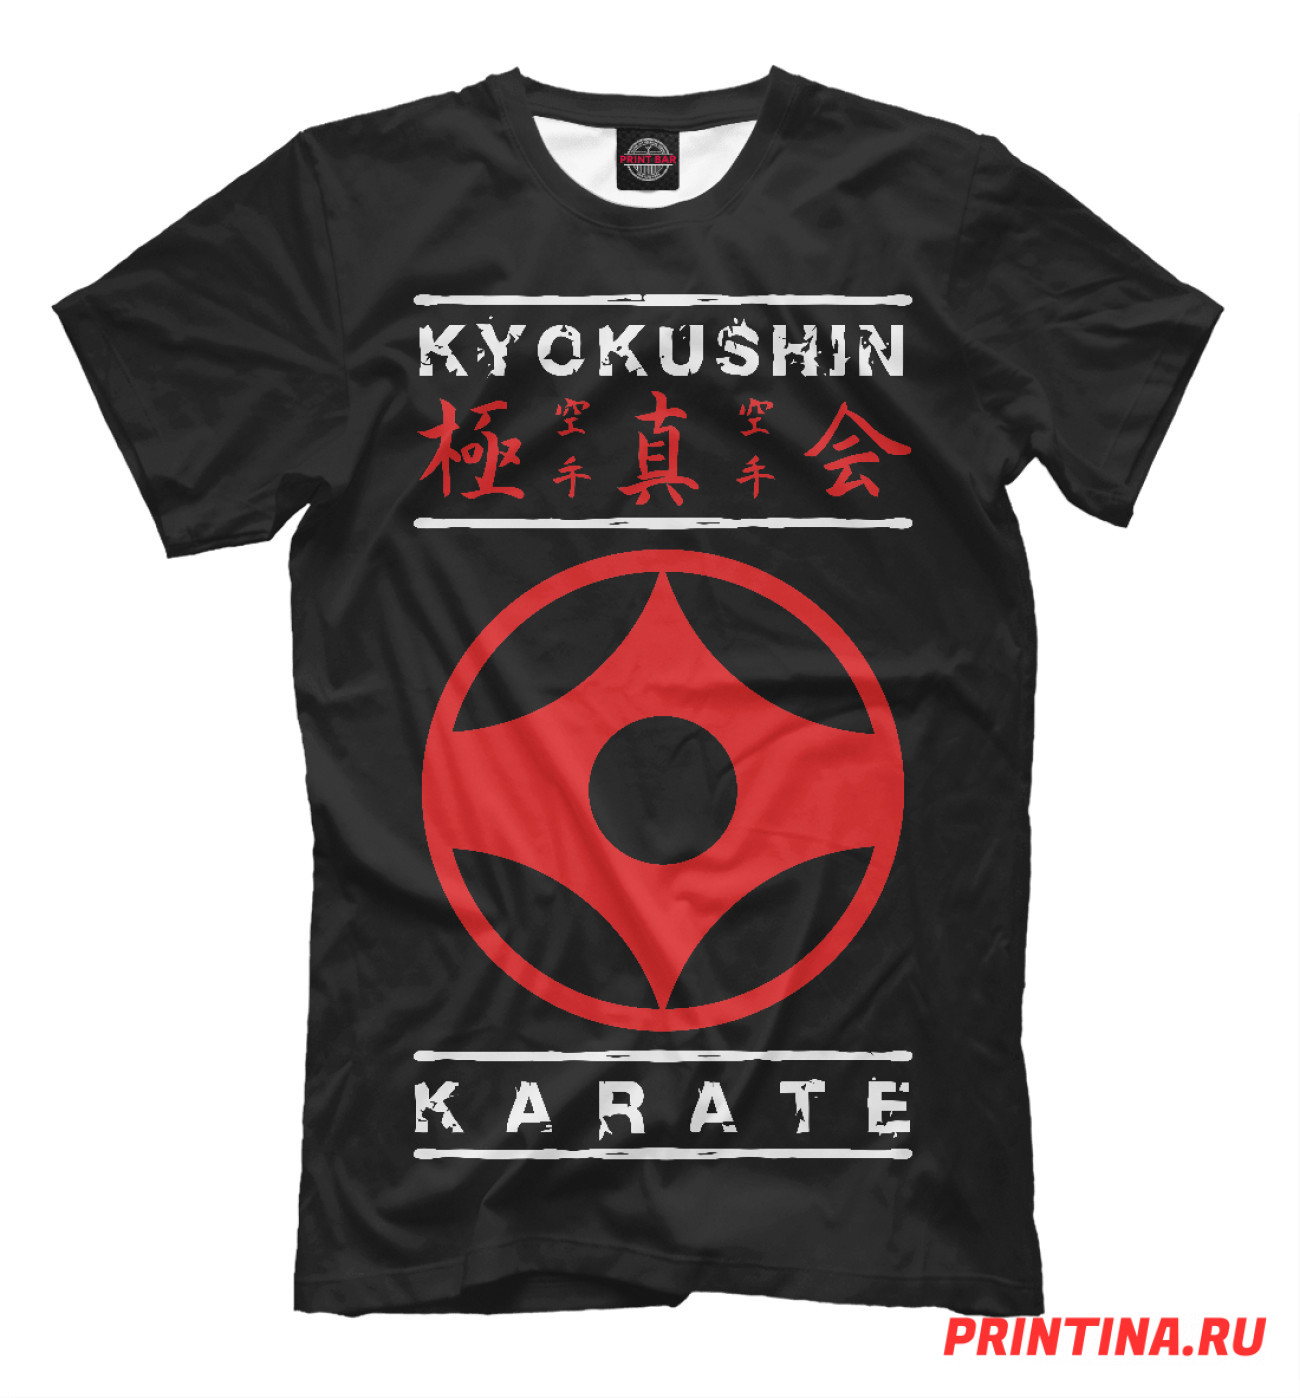 Мужская Футболка Kyokushin Karate, артикул: EDI-859707-fut-2